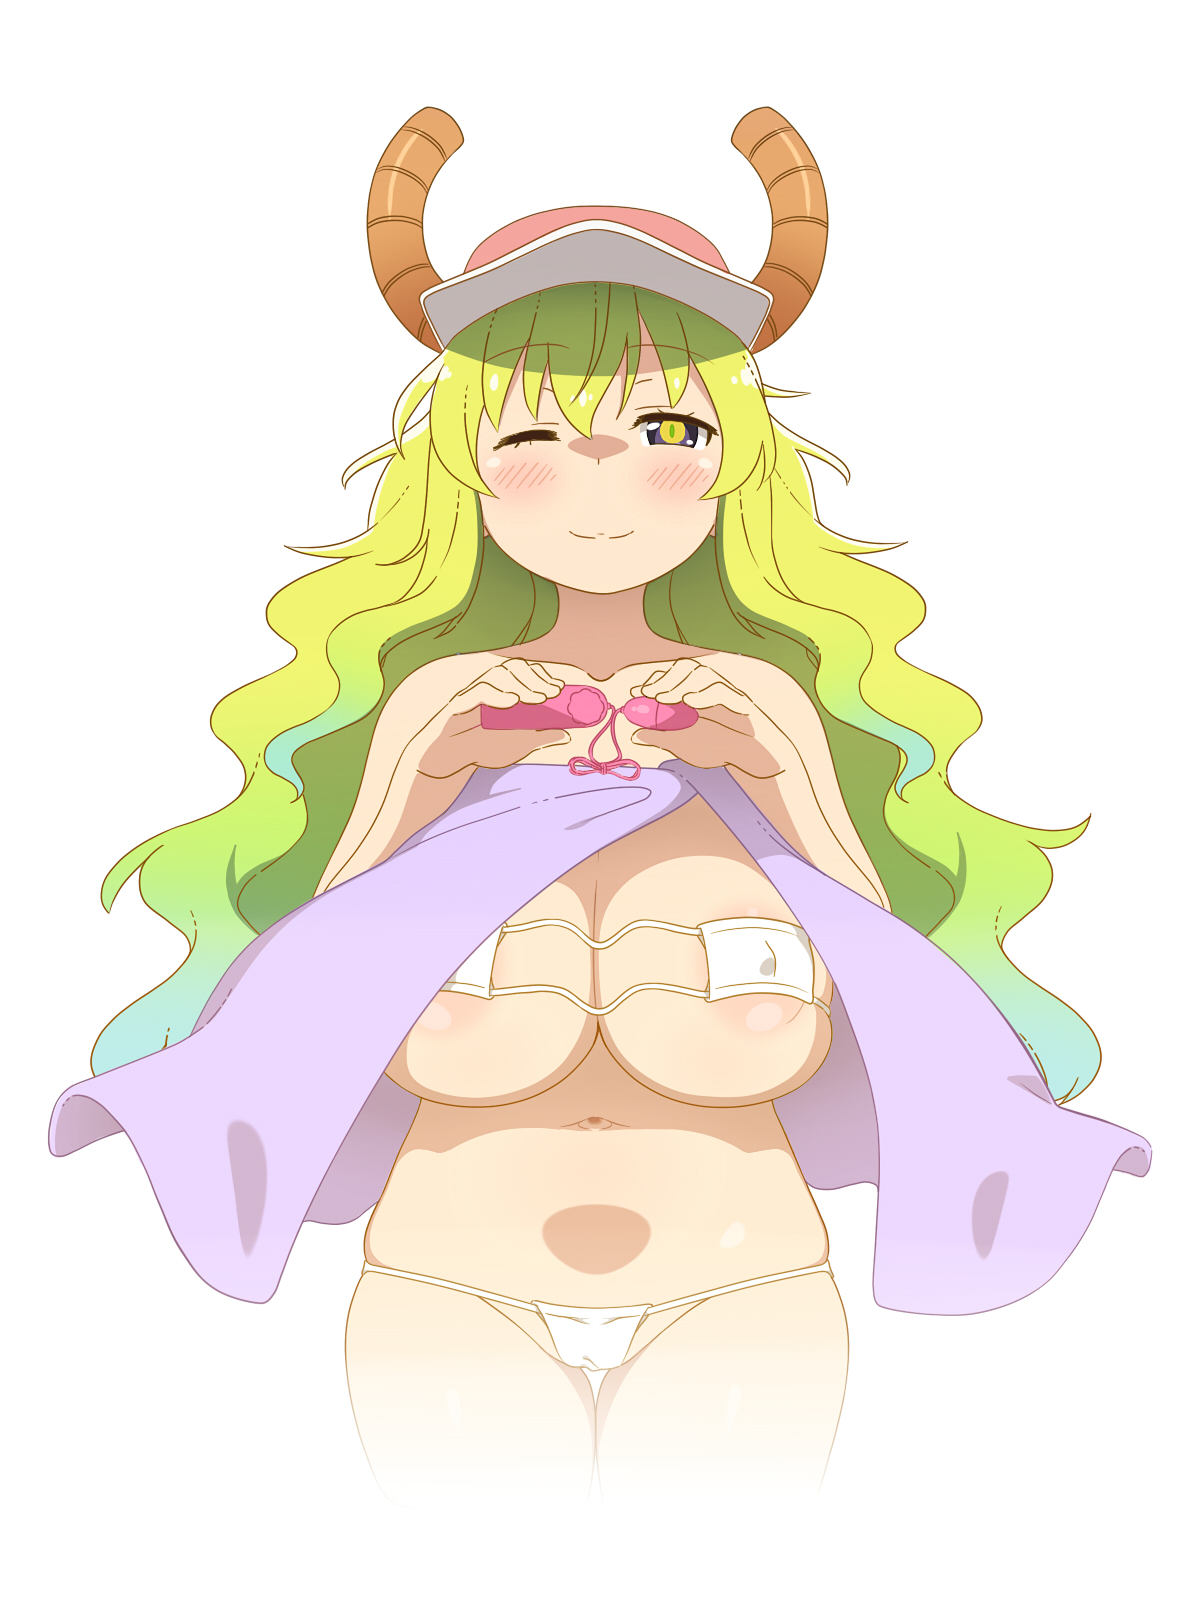 Miss kobayashi's dragon maid nudity